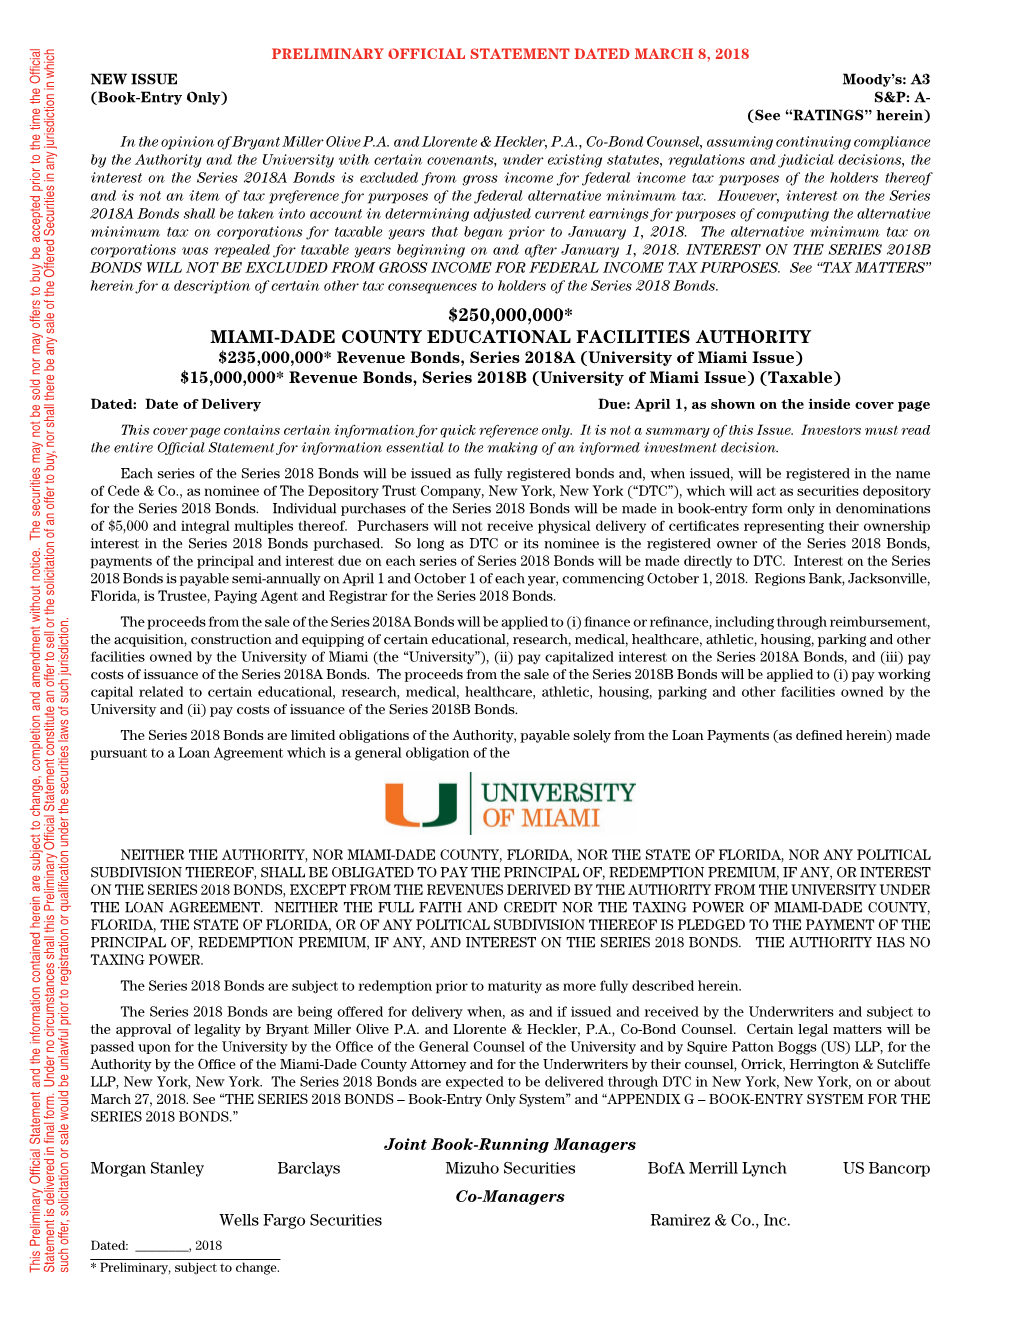 MIAMI-DADE COUNTY EDUCATIONAL FACILITIES AUTHORITY $235,000,000* Revenuebonds,Series2018a(Universityofmiamiissue) Wells Fargosecurities